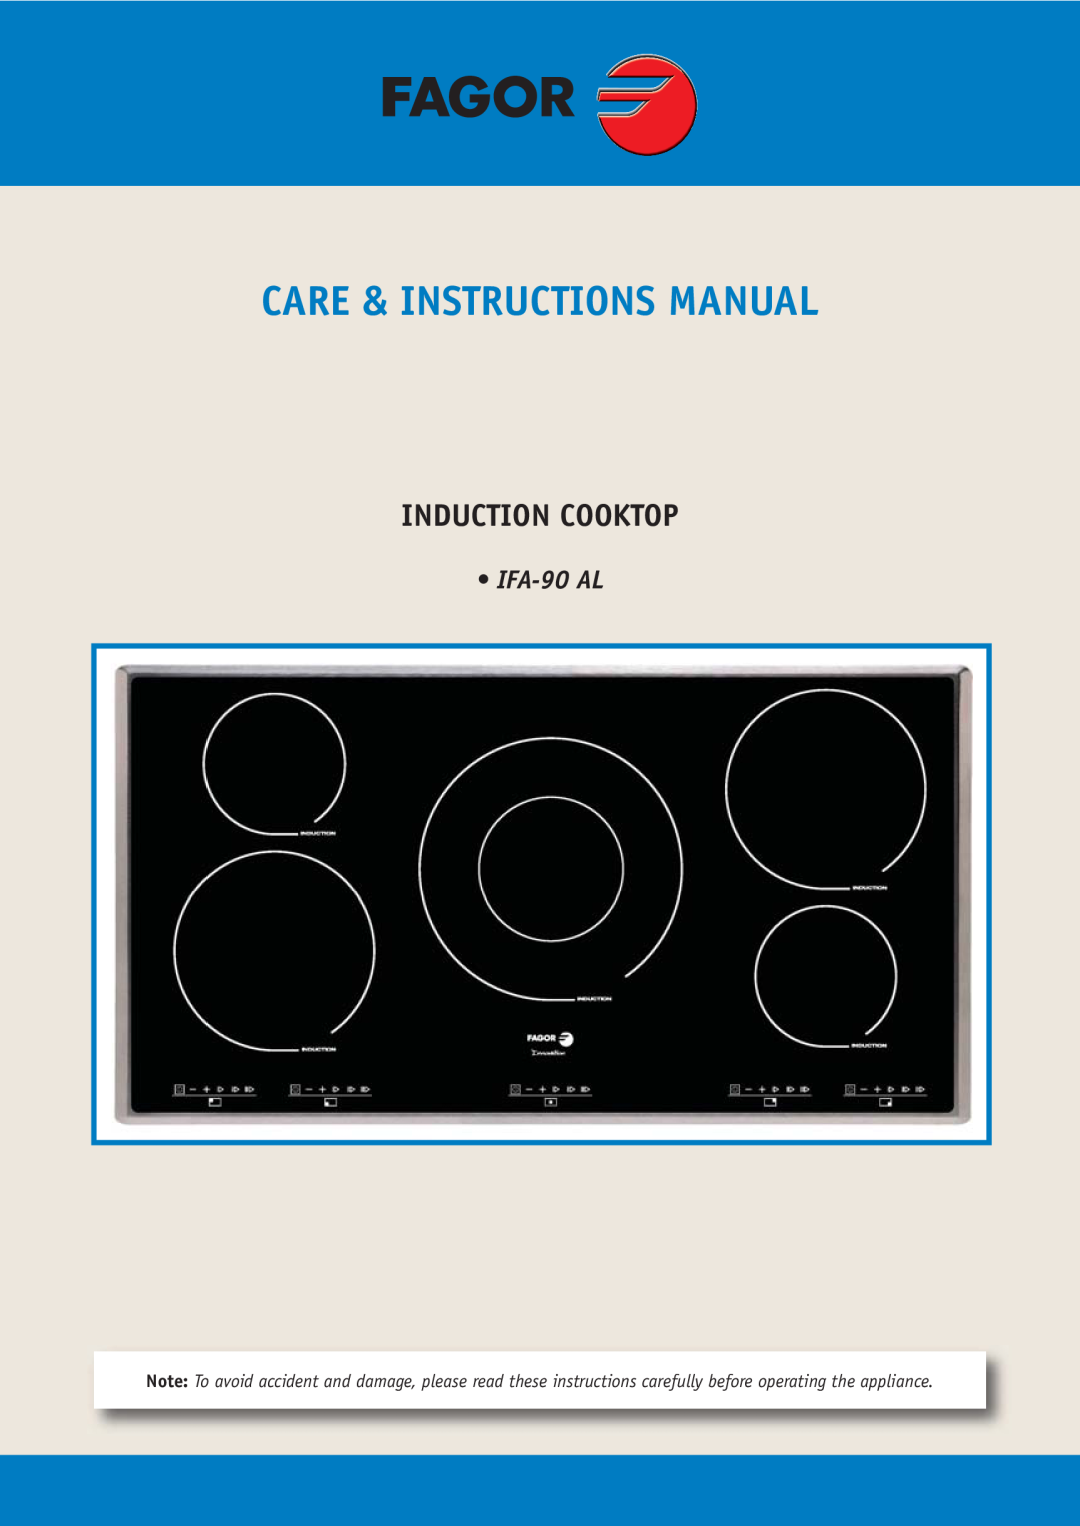 Fagor America manual Care & Instructions Manual, Induction Cooktop, IFA-90AL 